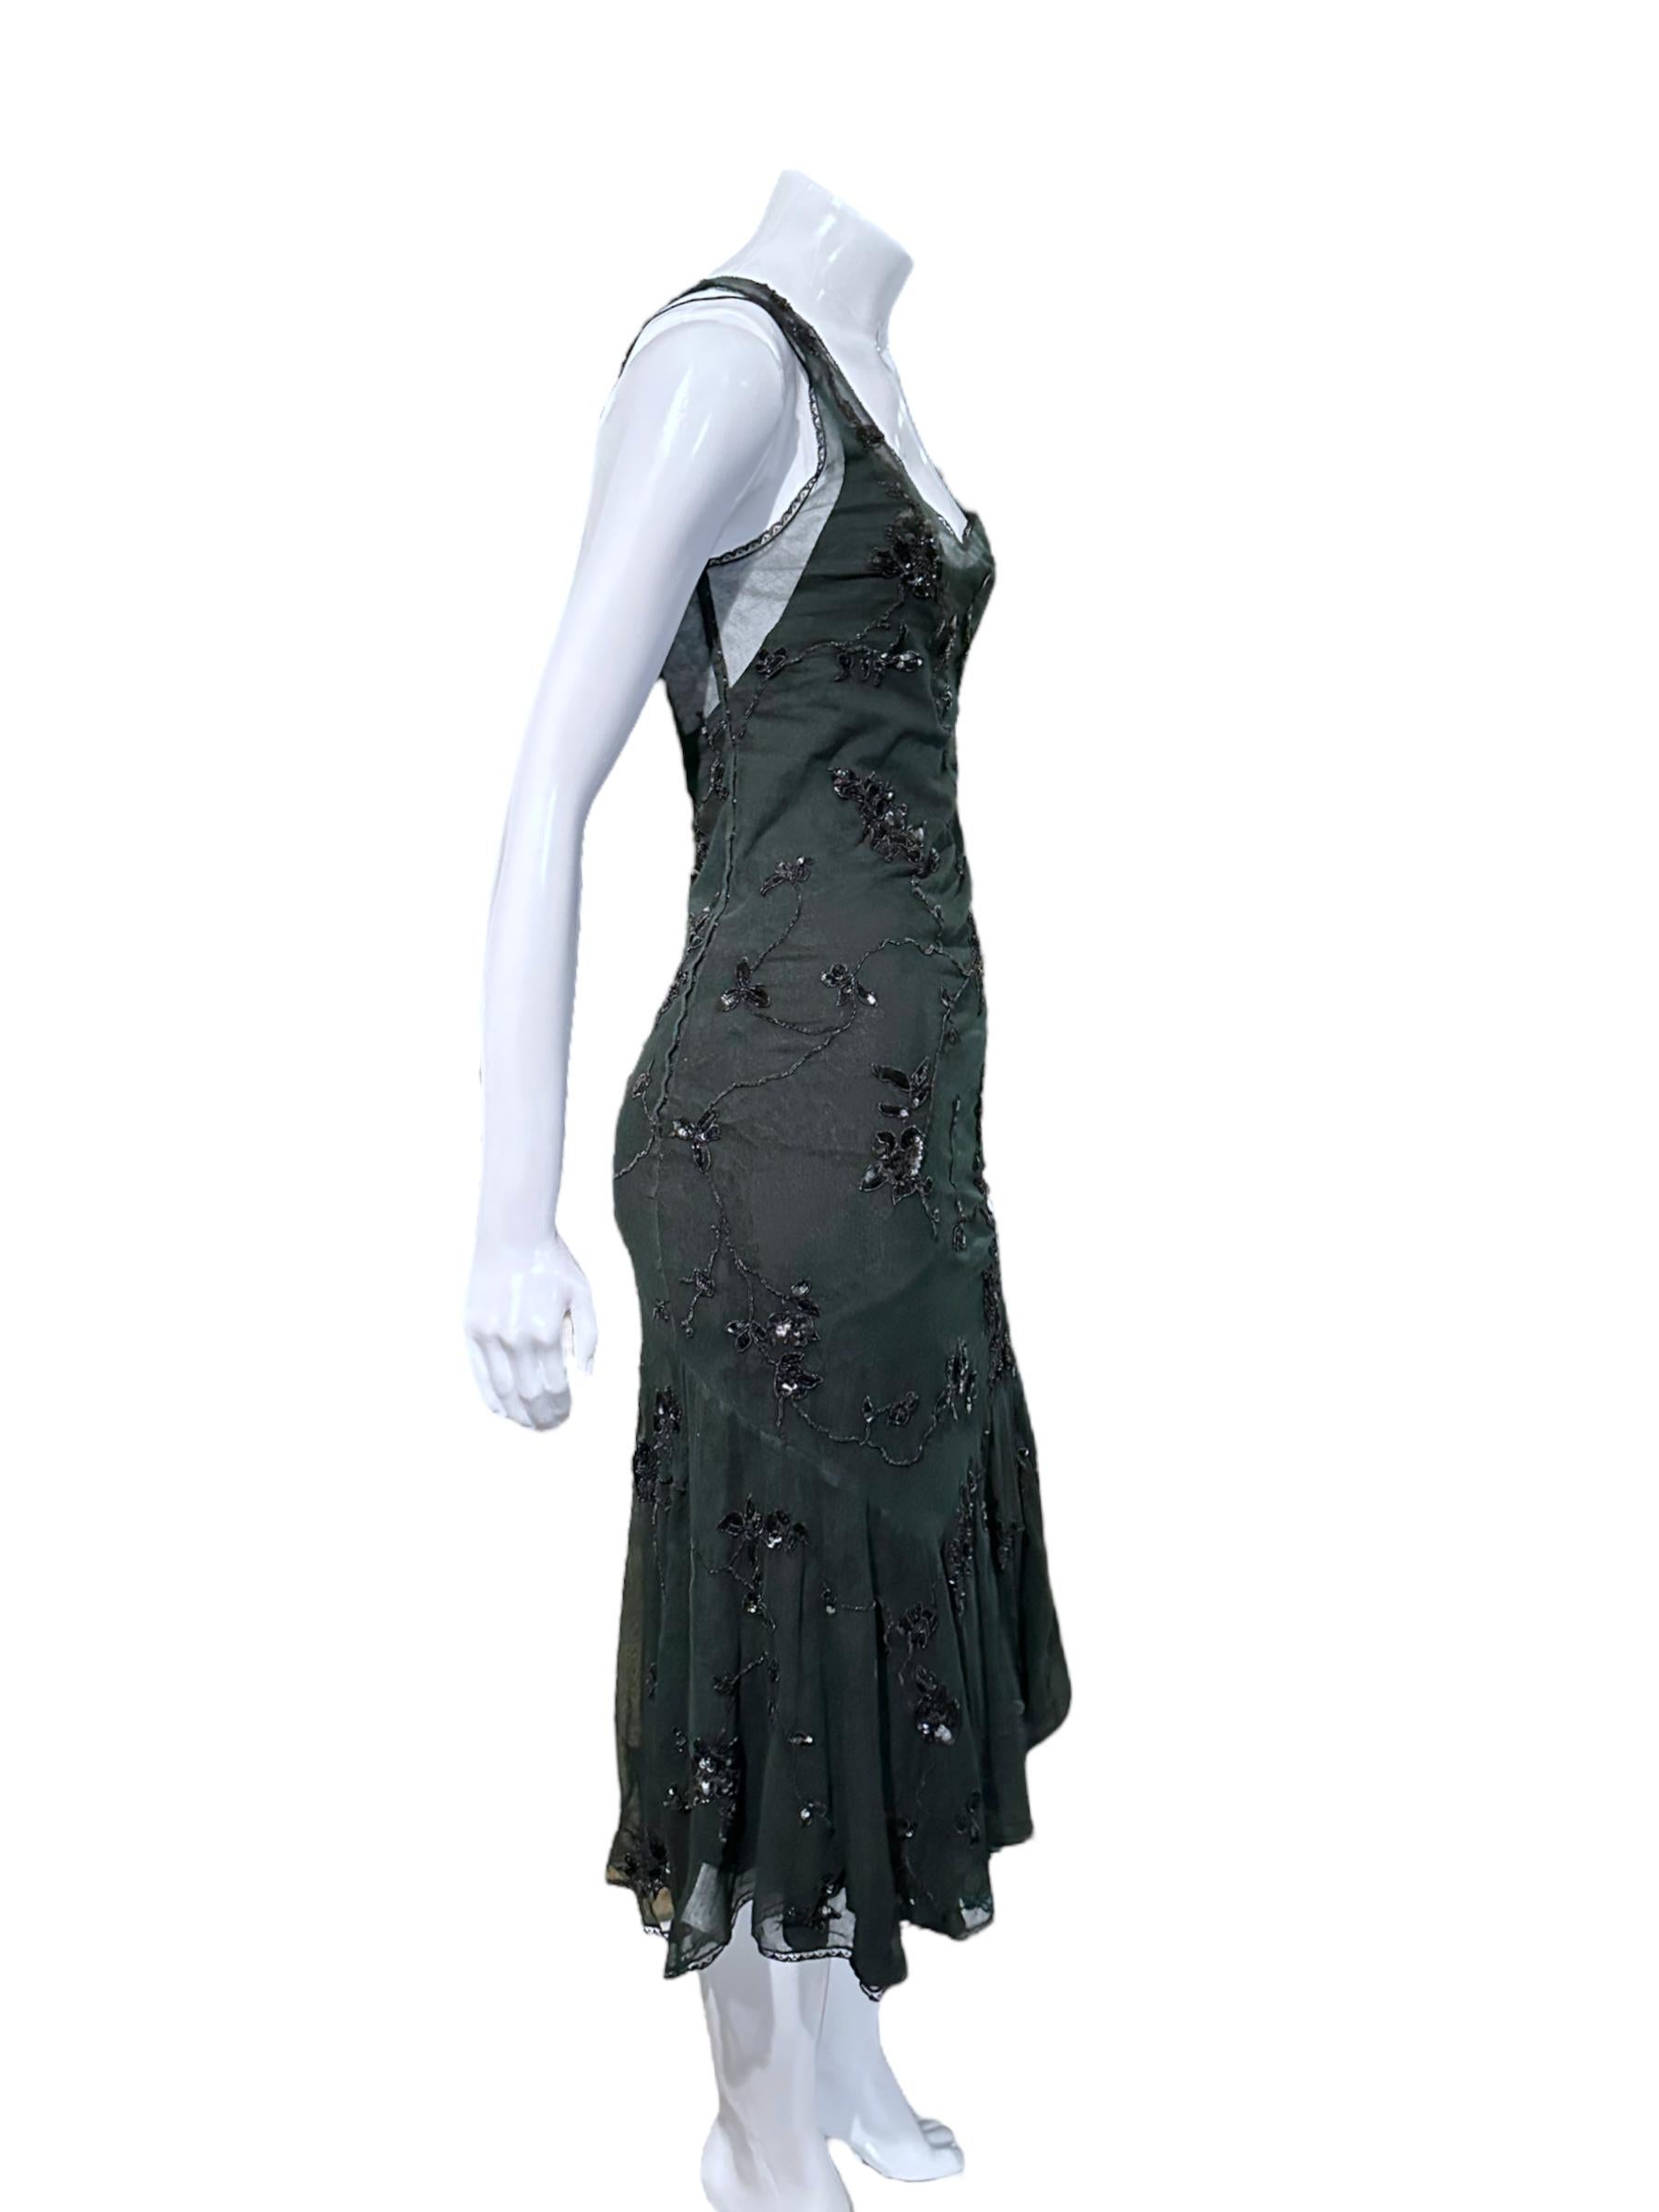 Christian Dior By John Galliano Ss 1998 Beaded Tulle Overlay Slip Dress For Sale 1